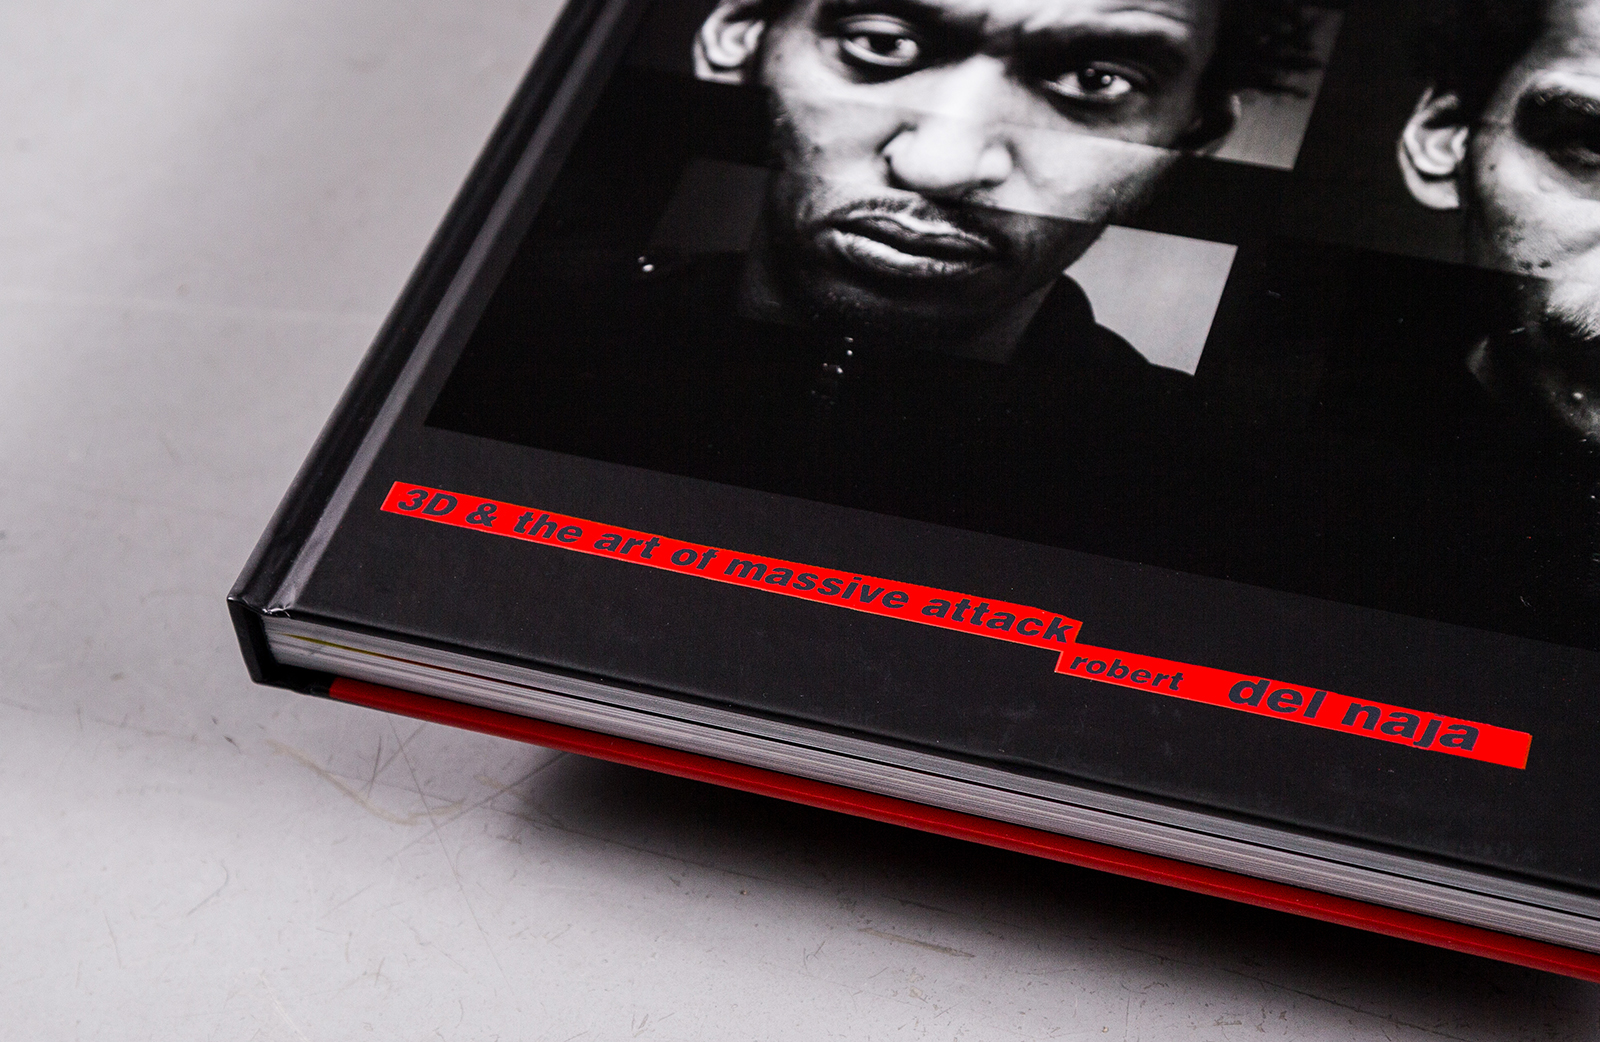 3D & The Art of Massive Attack Book | The Vinyl Factory